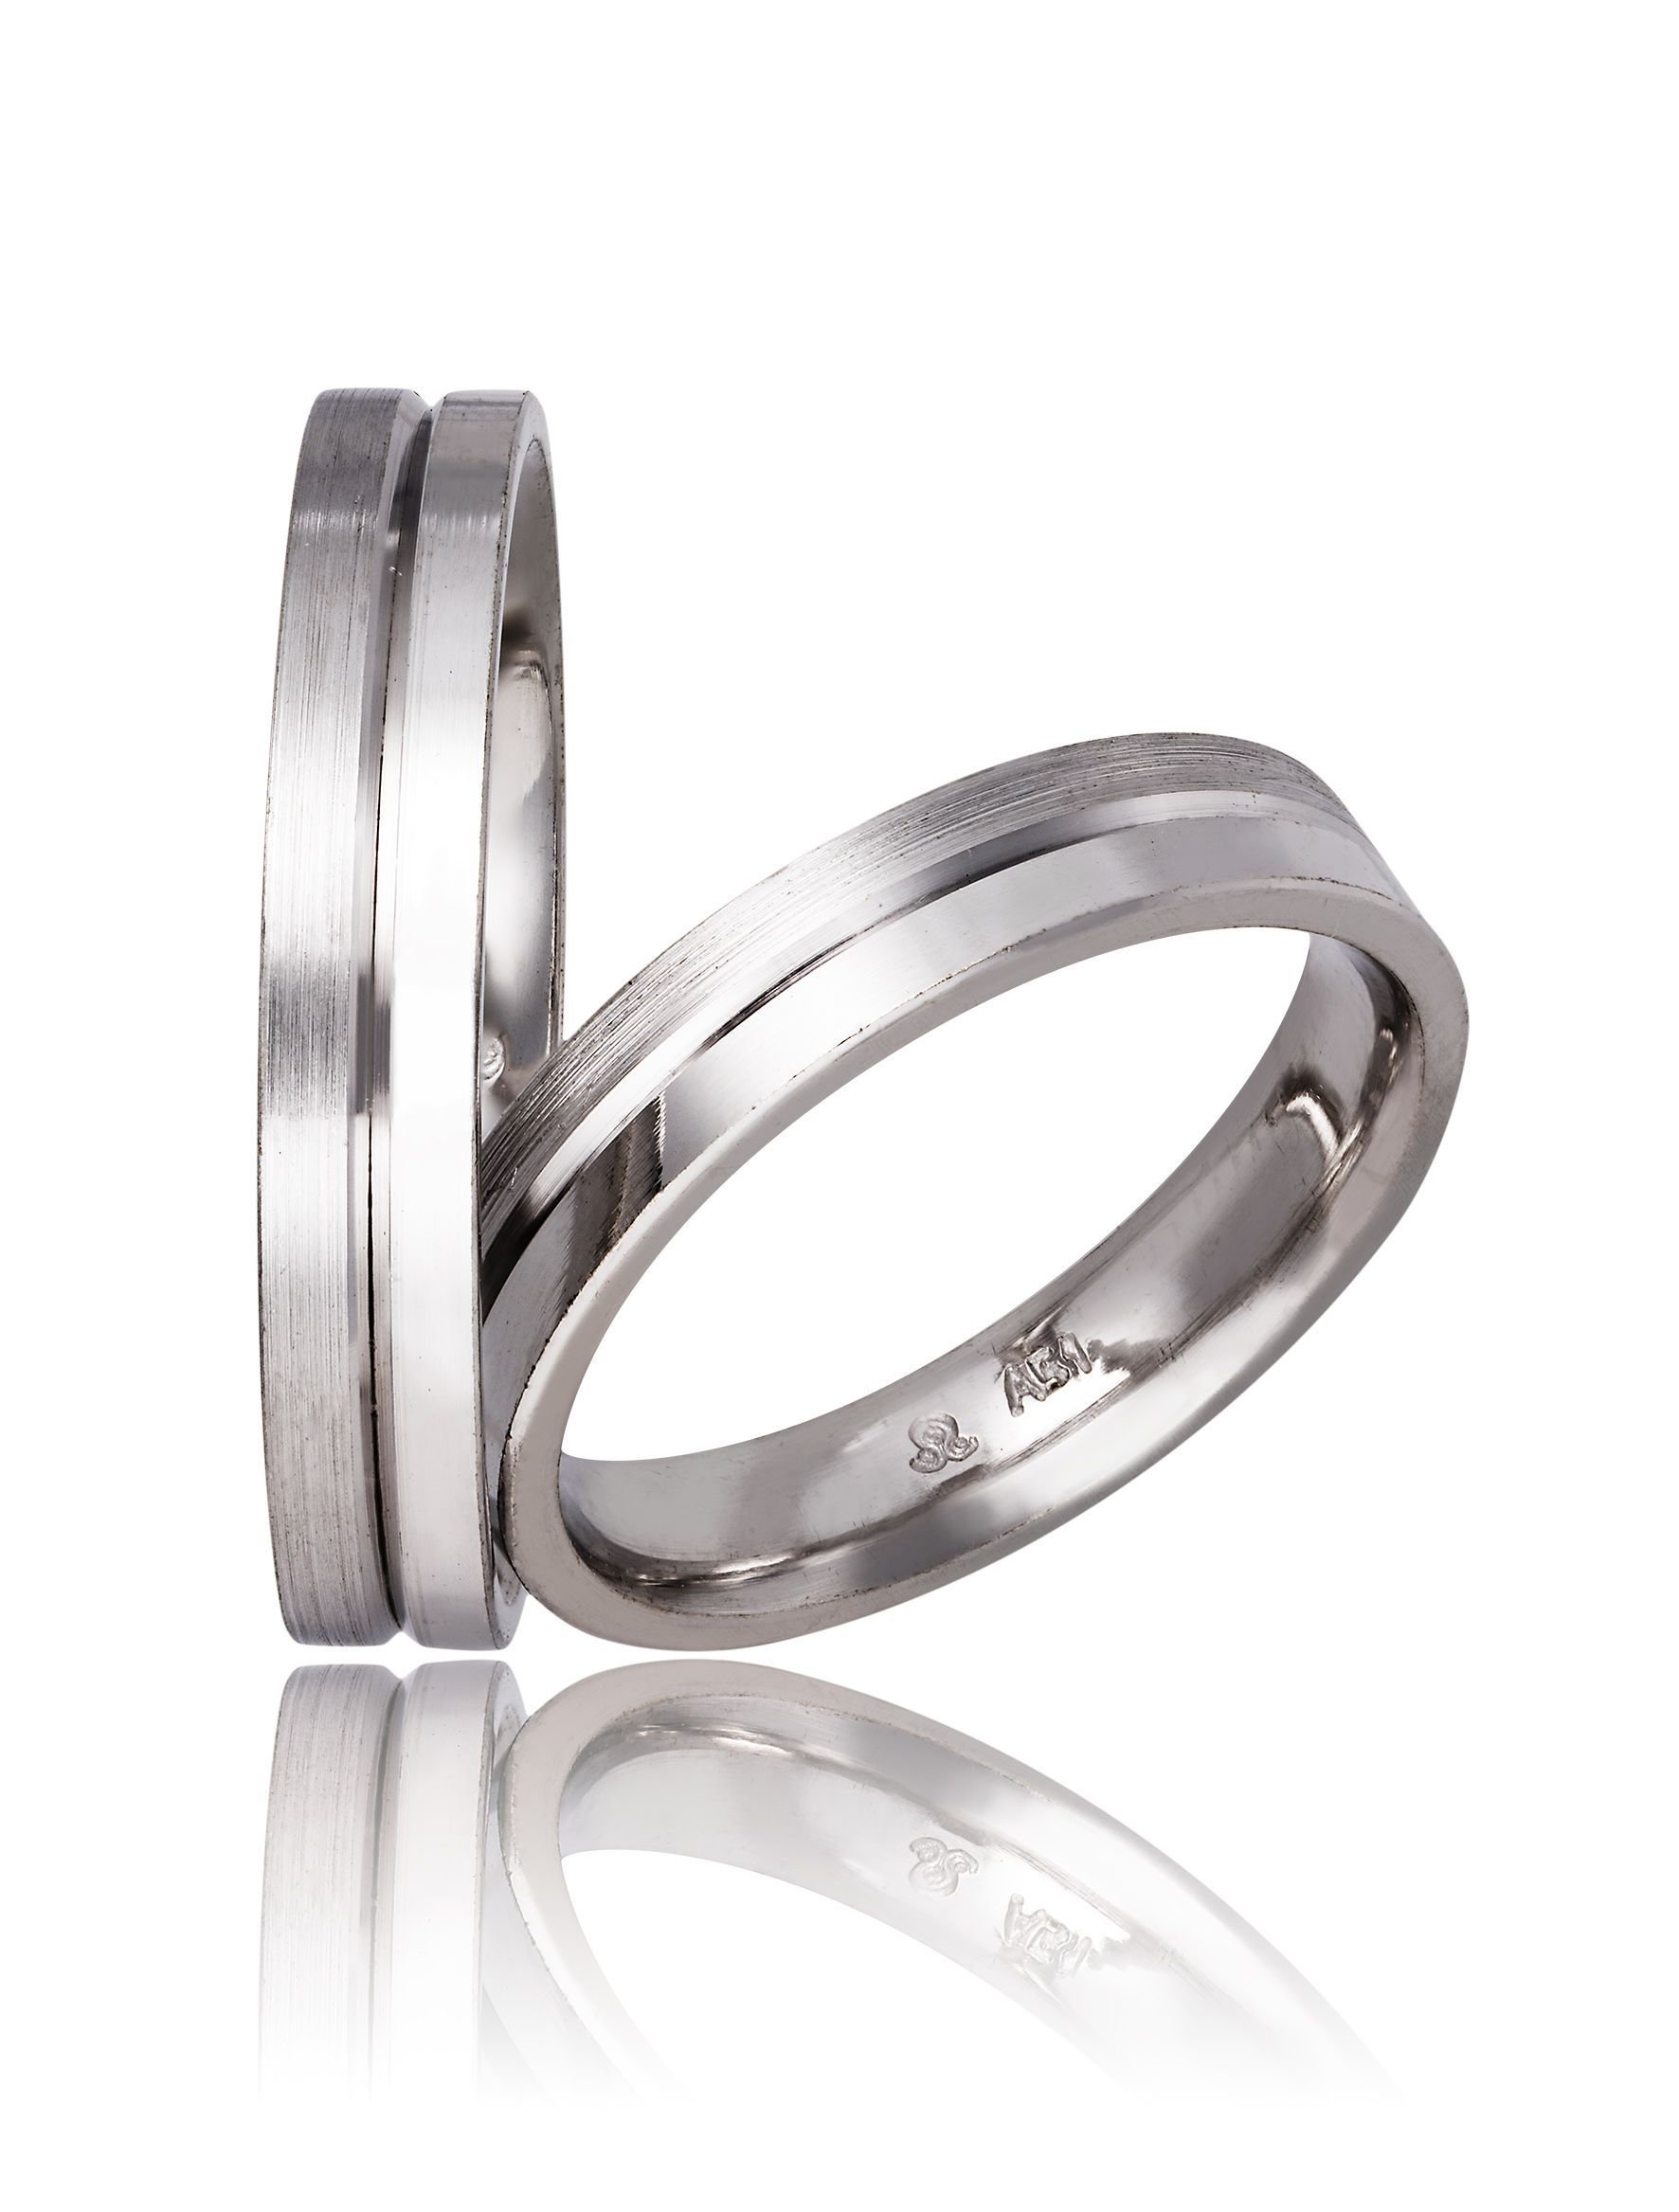 White gold wedding rings 4mm (code 739)